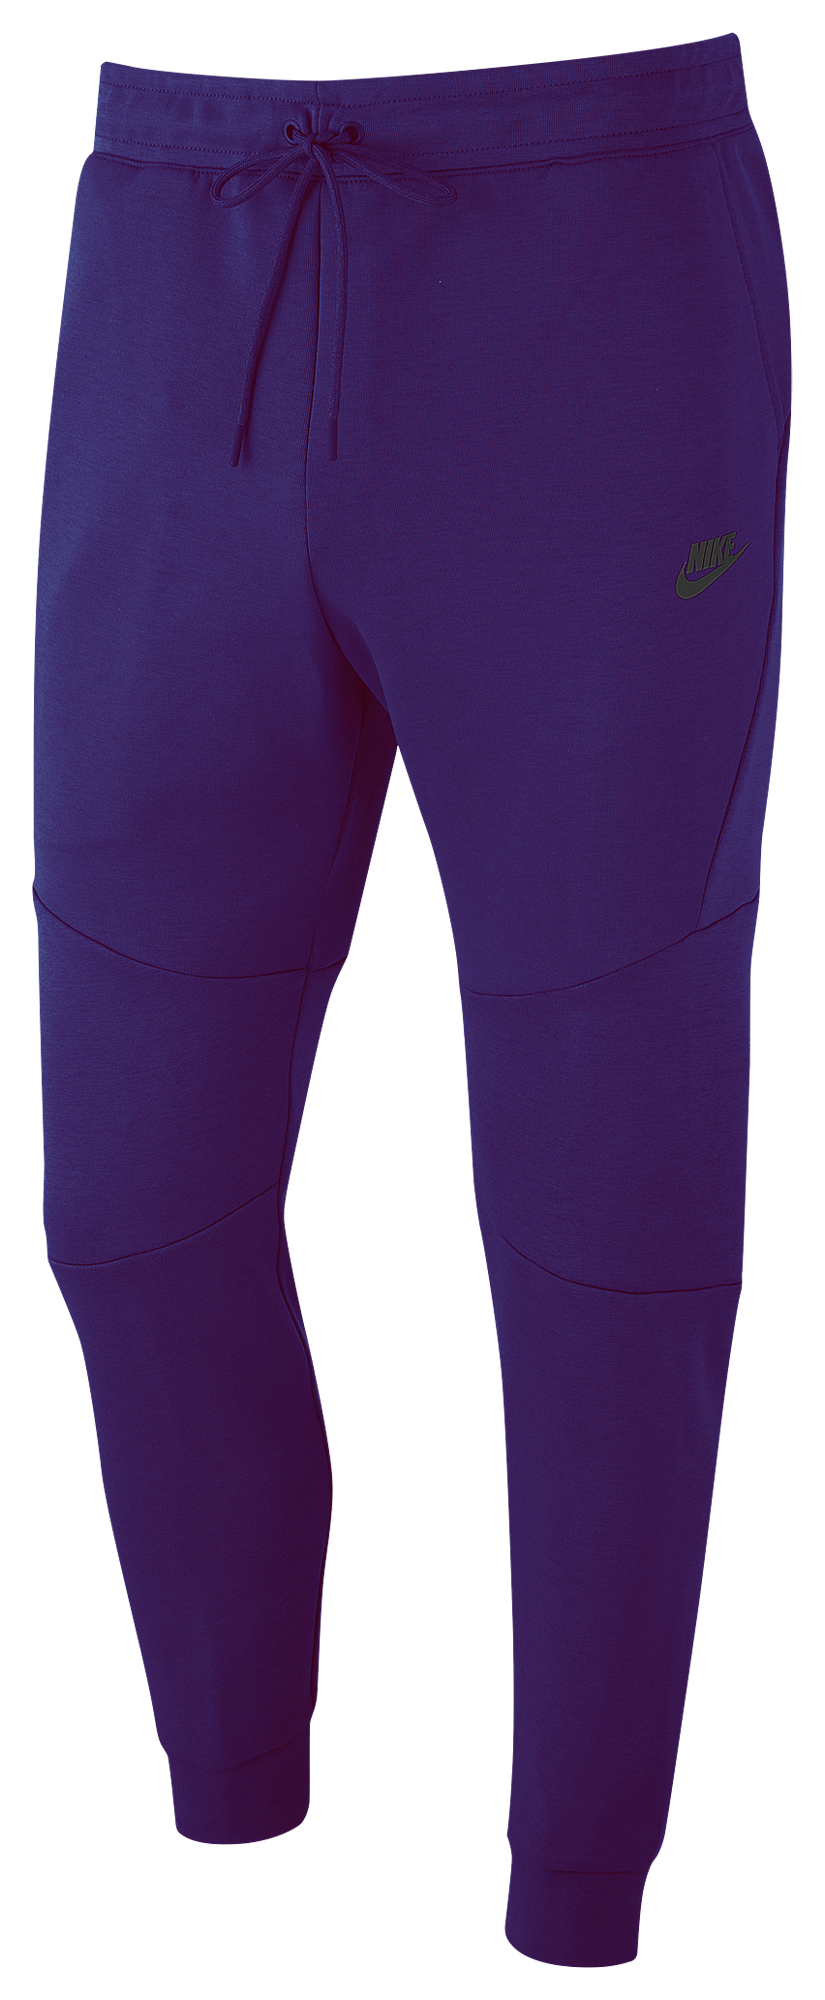 nike tech fleece pants purple